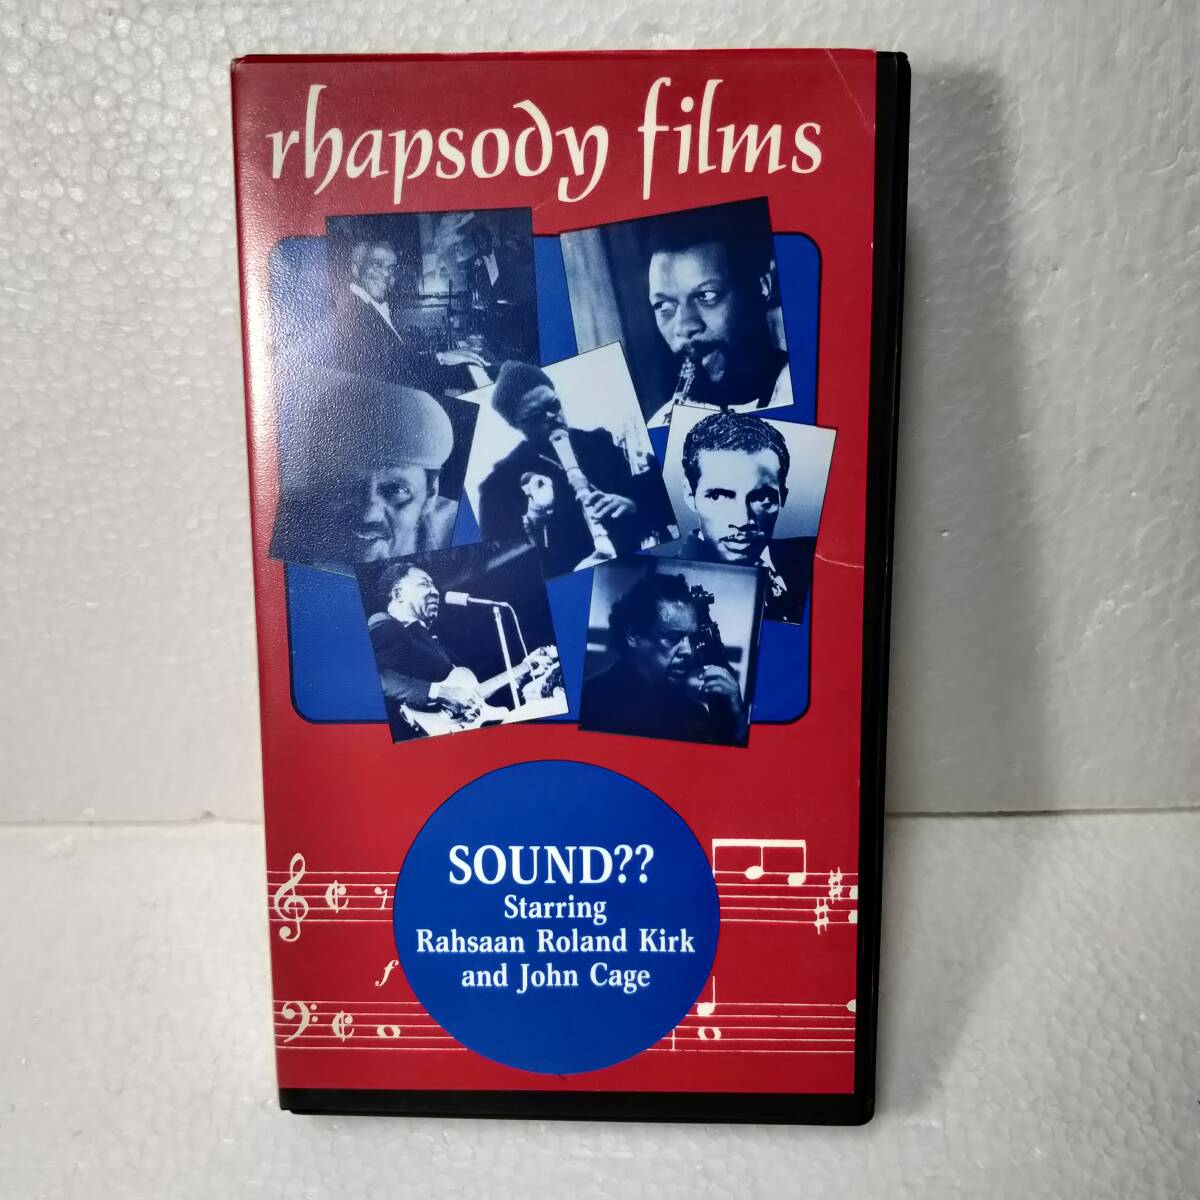 SOUND?? Starring Rahsaan Roland Kirk and John Cage　VHS RHAPSODY FILMS JAZZ 現代音楽